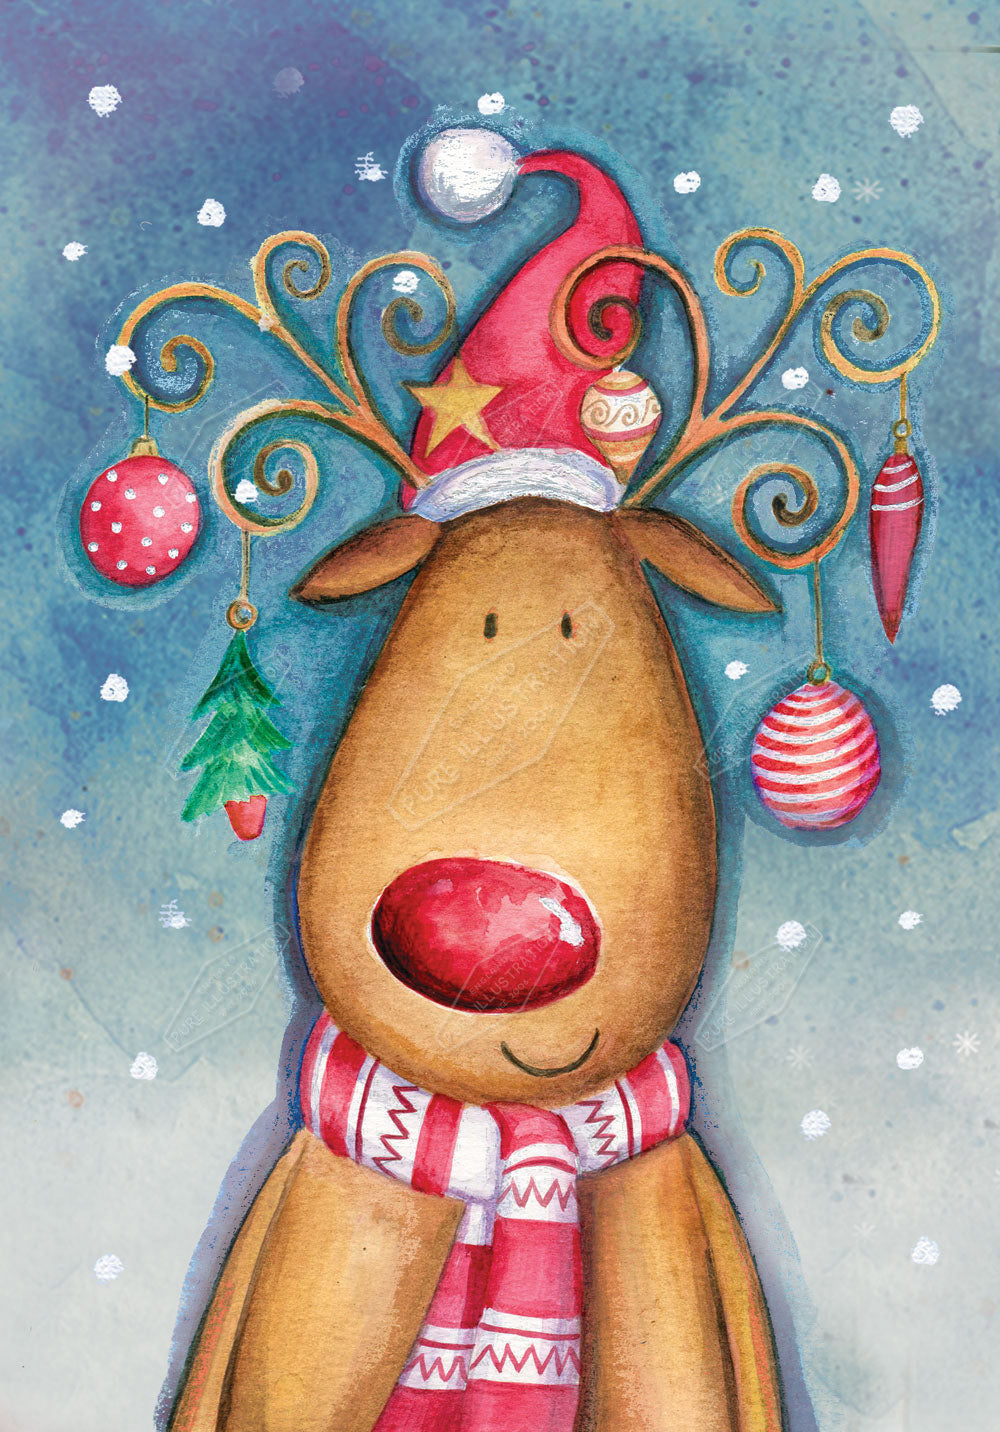 00023021DEV - Deva Evans is represented by Pure Art Licensing Agency - Christmas Greeting Card Design